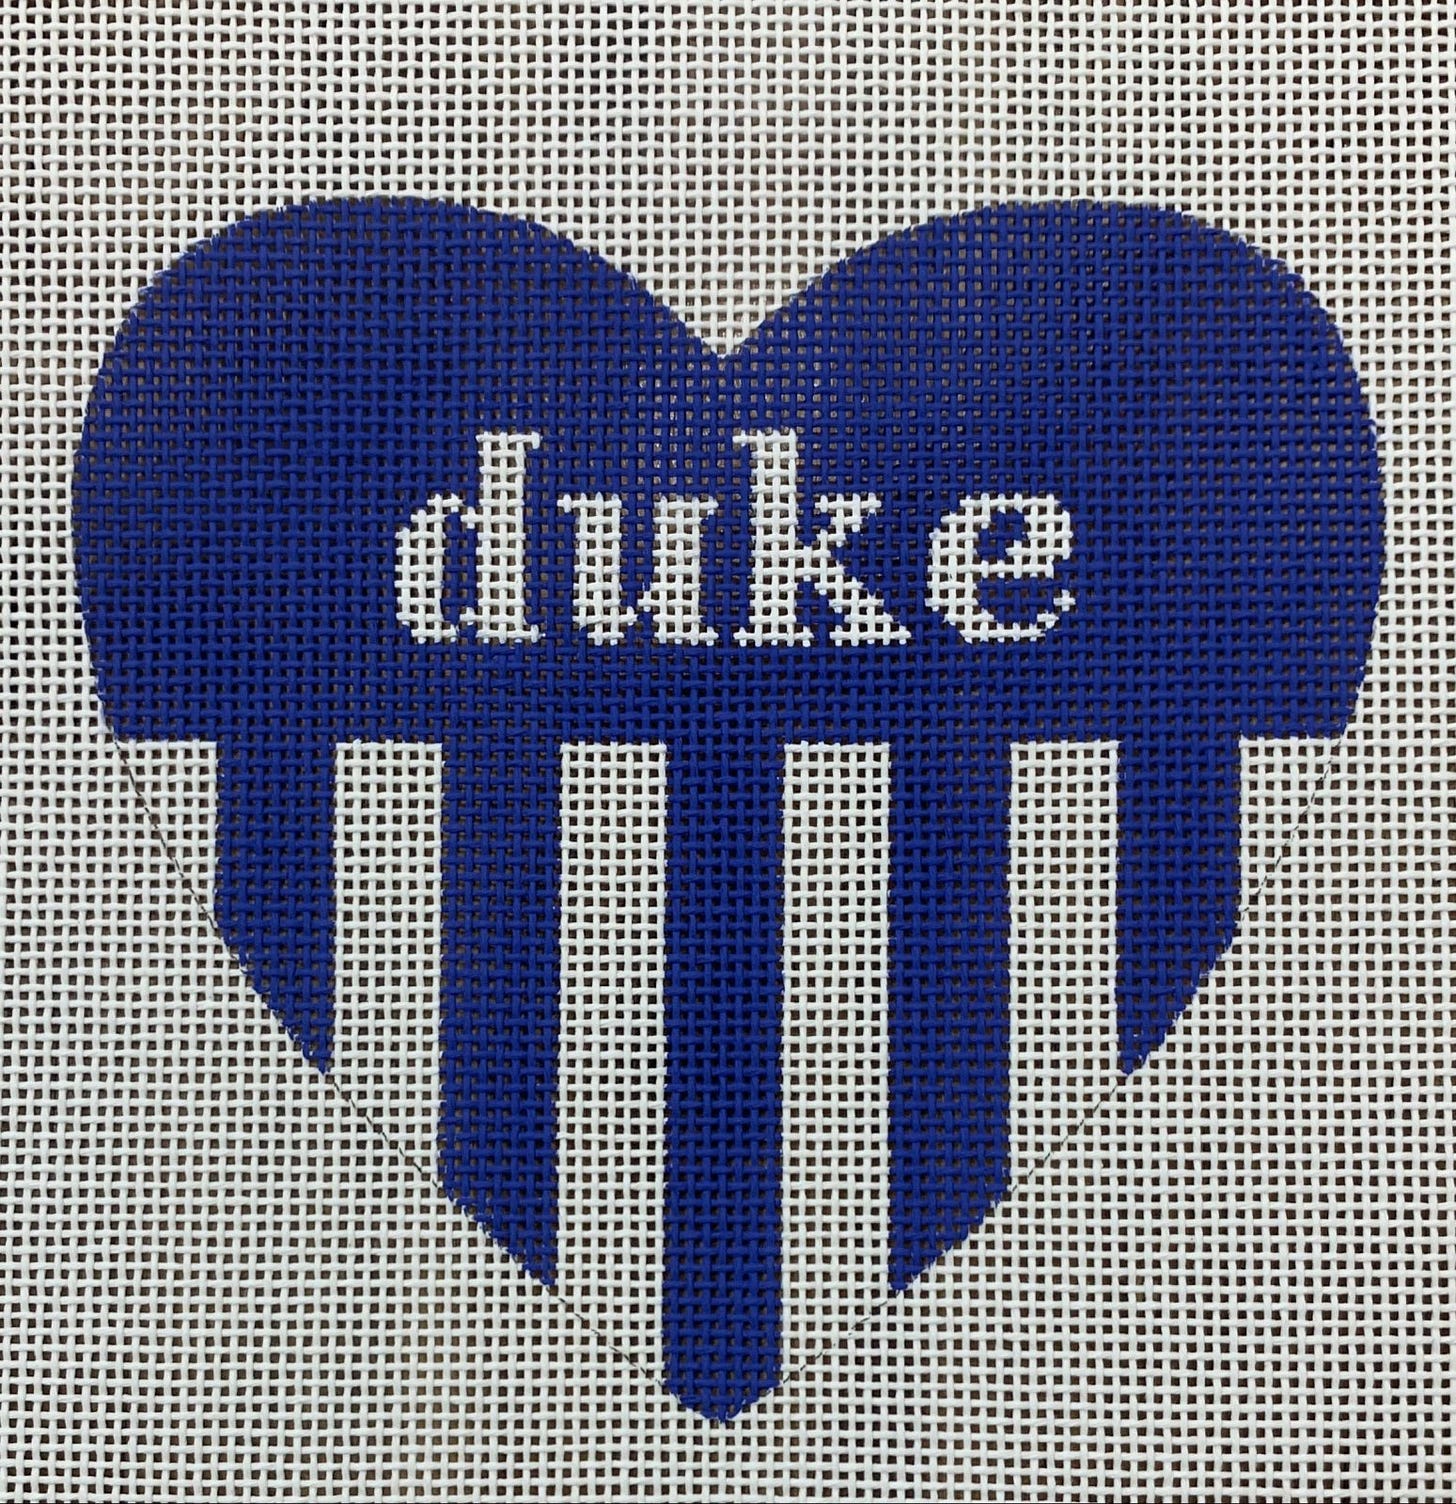 Duke Heart